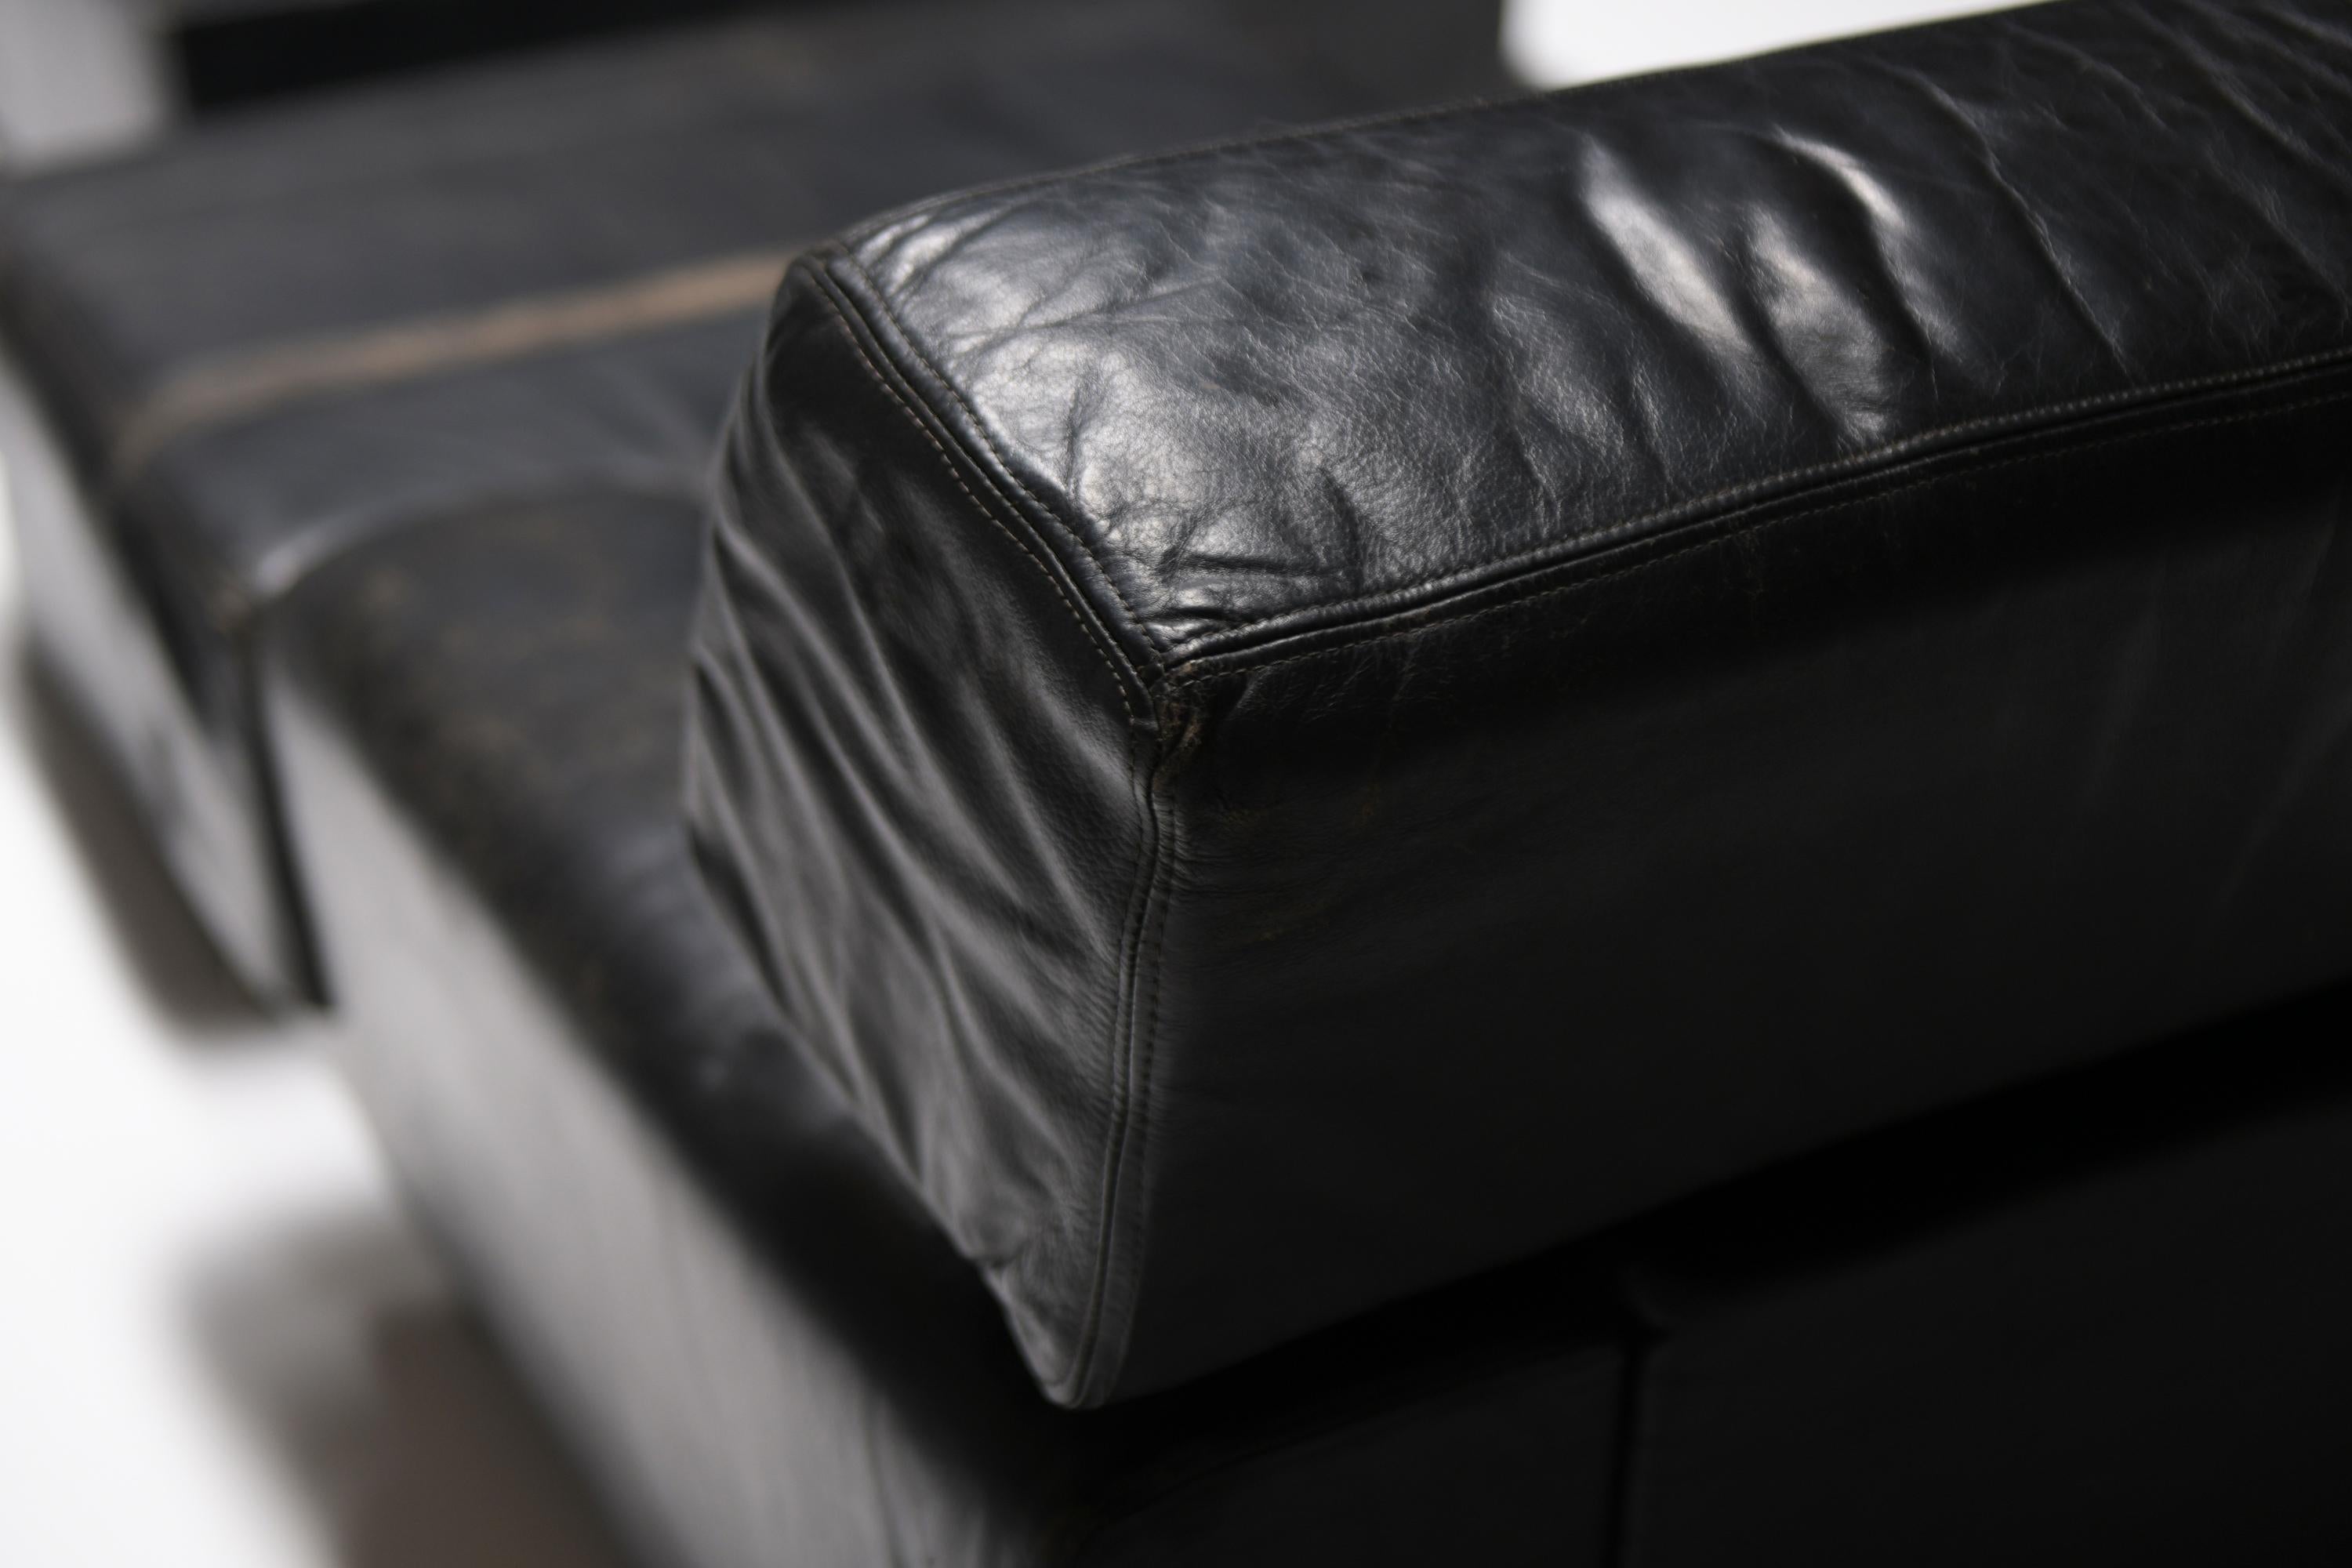 Stunning Percival Lafer sofa set in original black leather - Lafer S.A. - Brazil For Sale 1